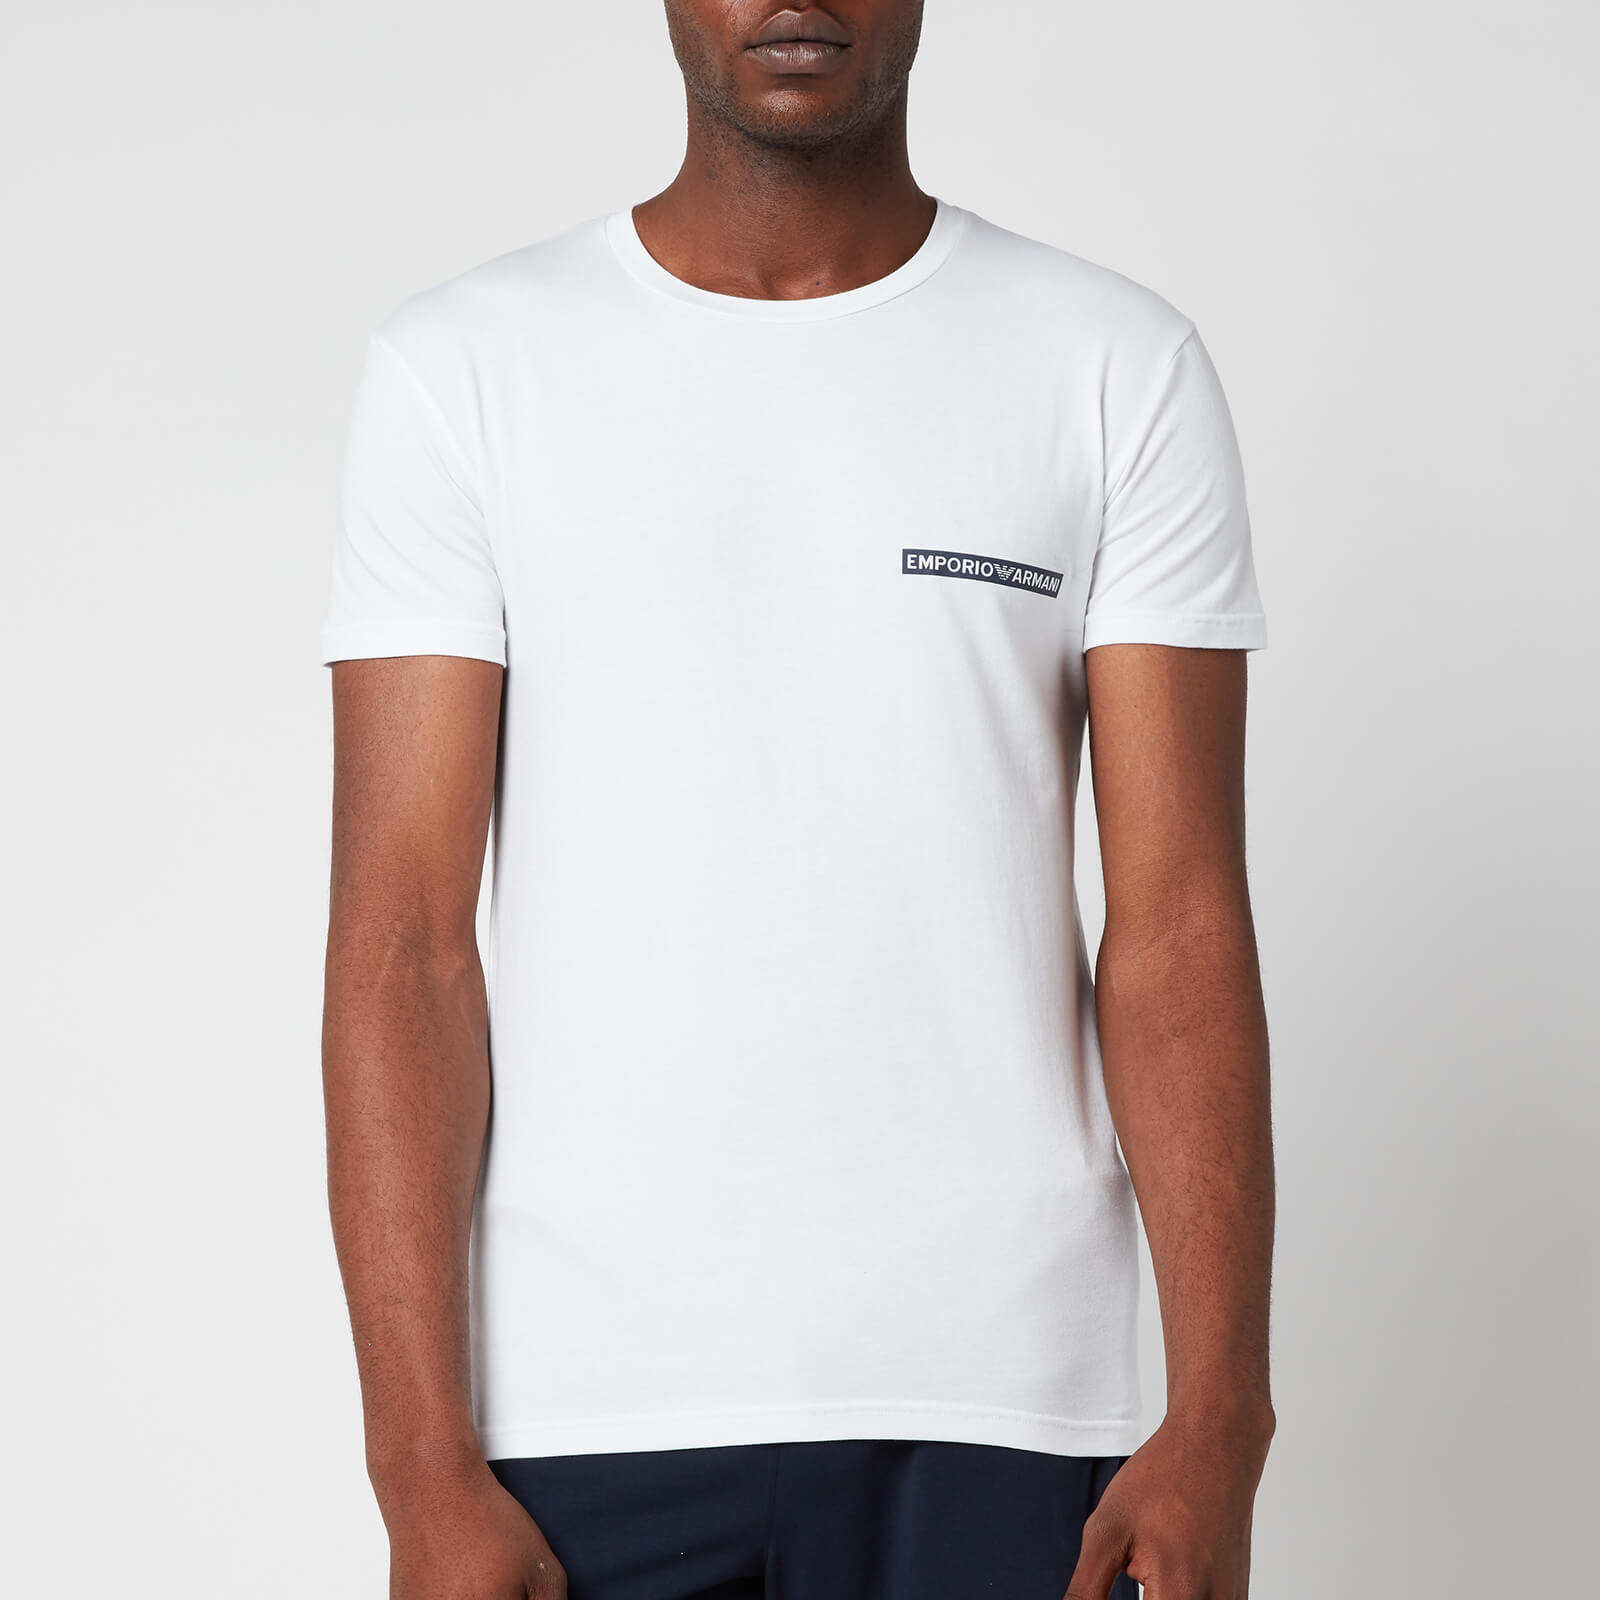 Emporio Armani Men's The New Icon Crew Neck T-Shirt - White - S